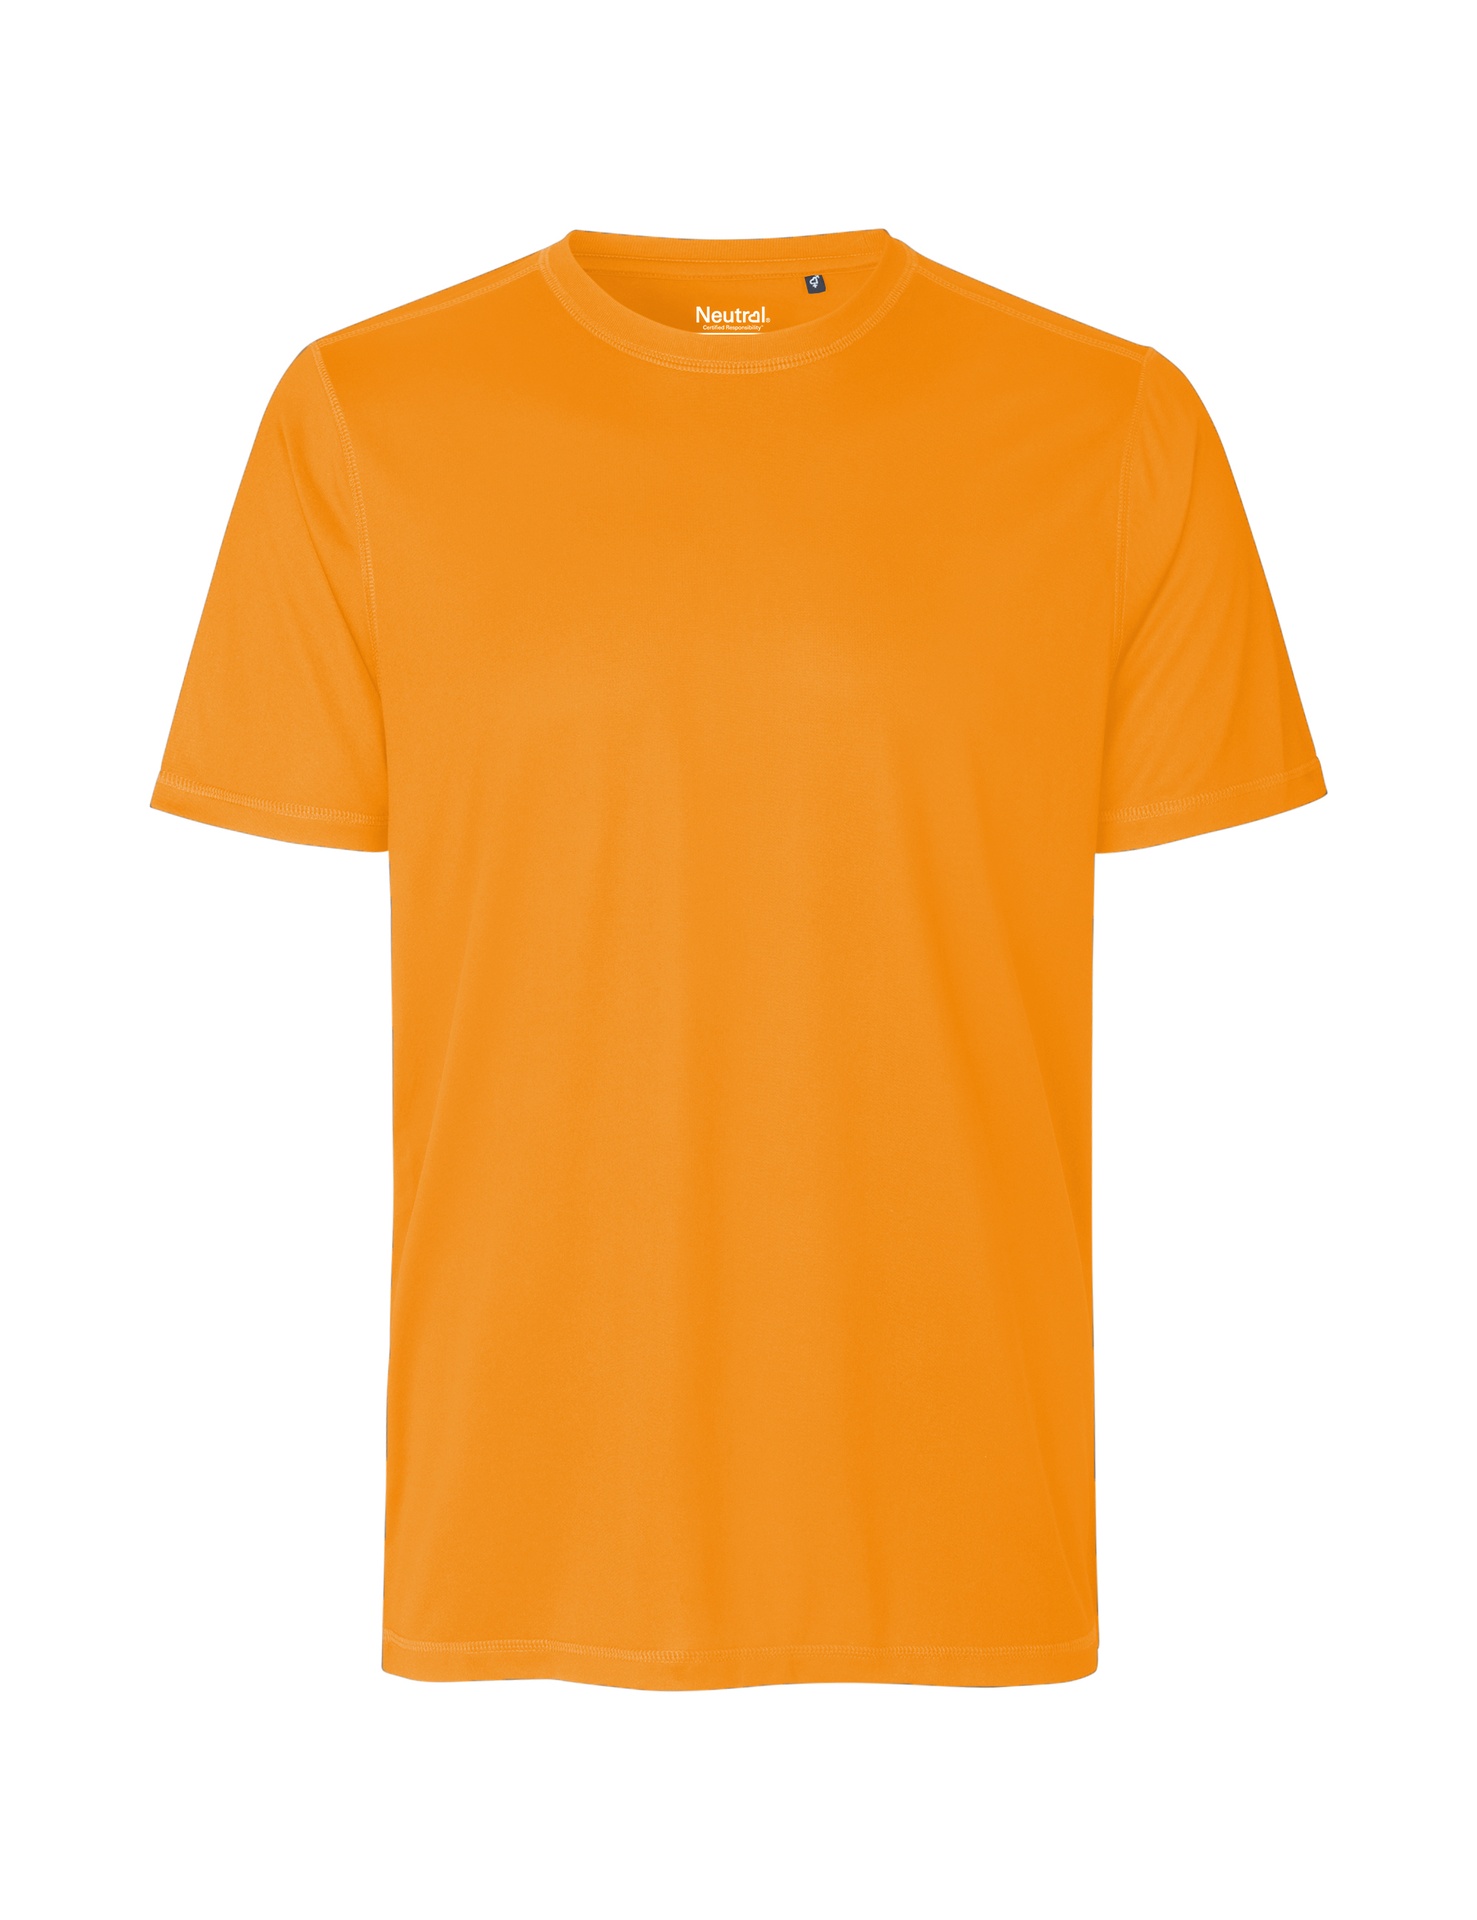 [PR/03795] Recycled Performance T-Shirt (Okay Orange 31, 3XL)